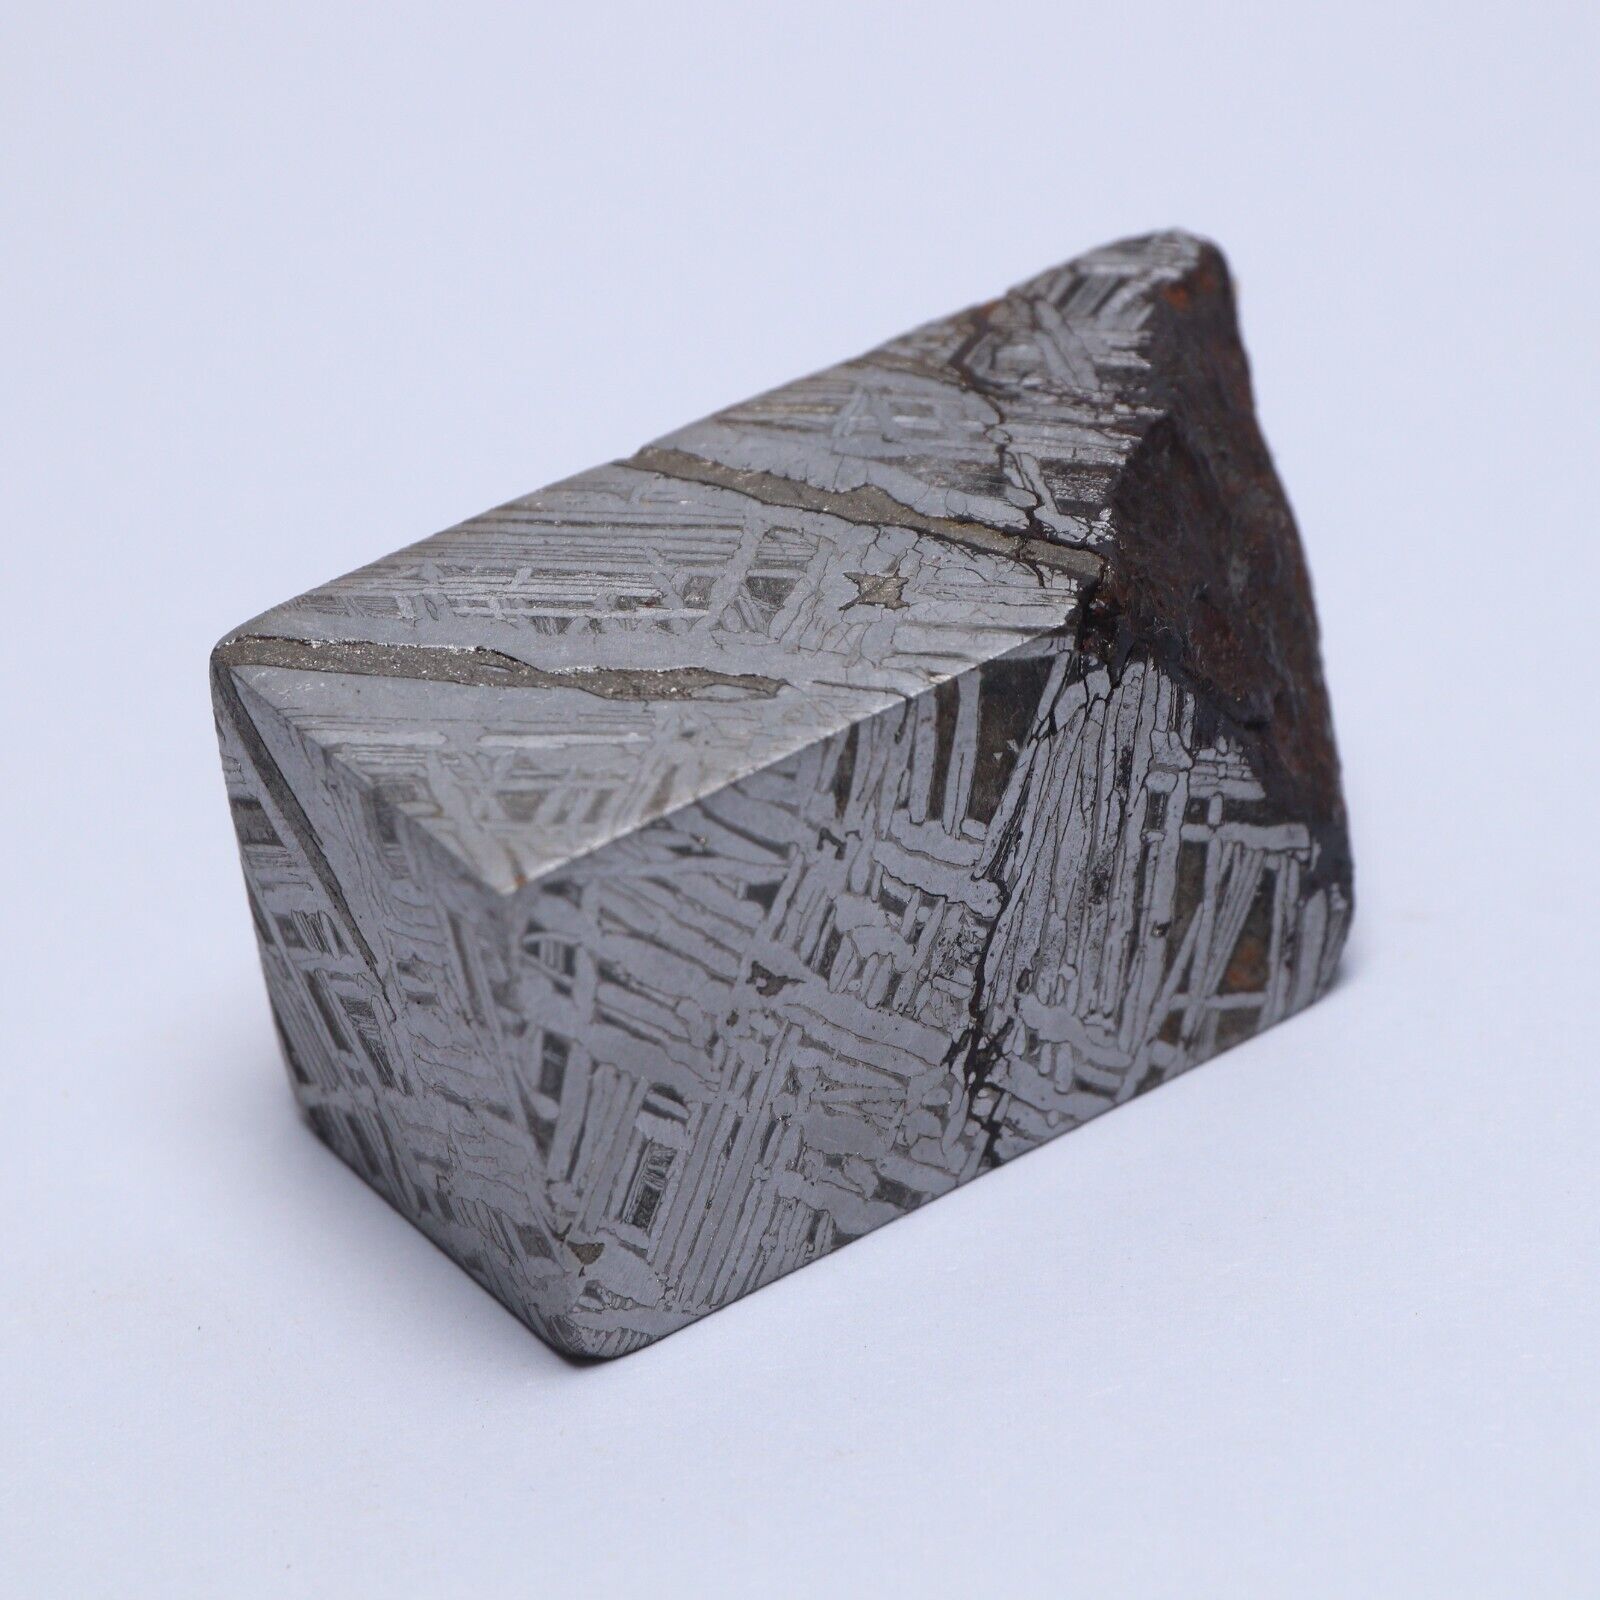 228g Muonionalusta meteorite,Natural meteorite slices,Collectibles,gift N3921